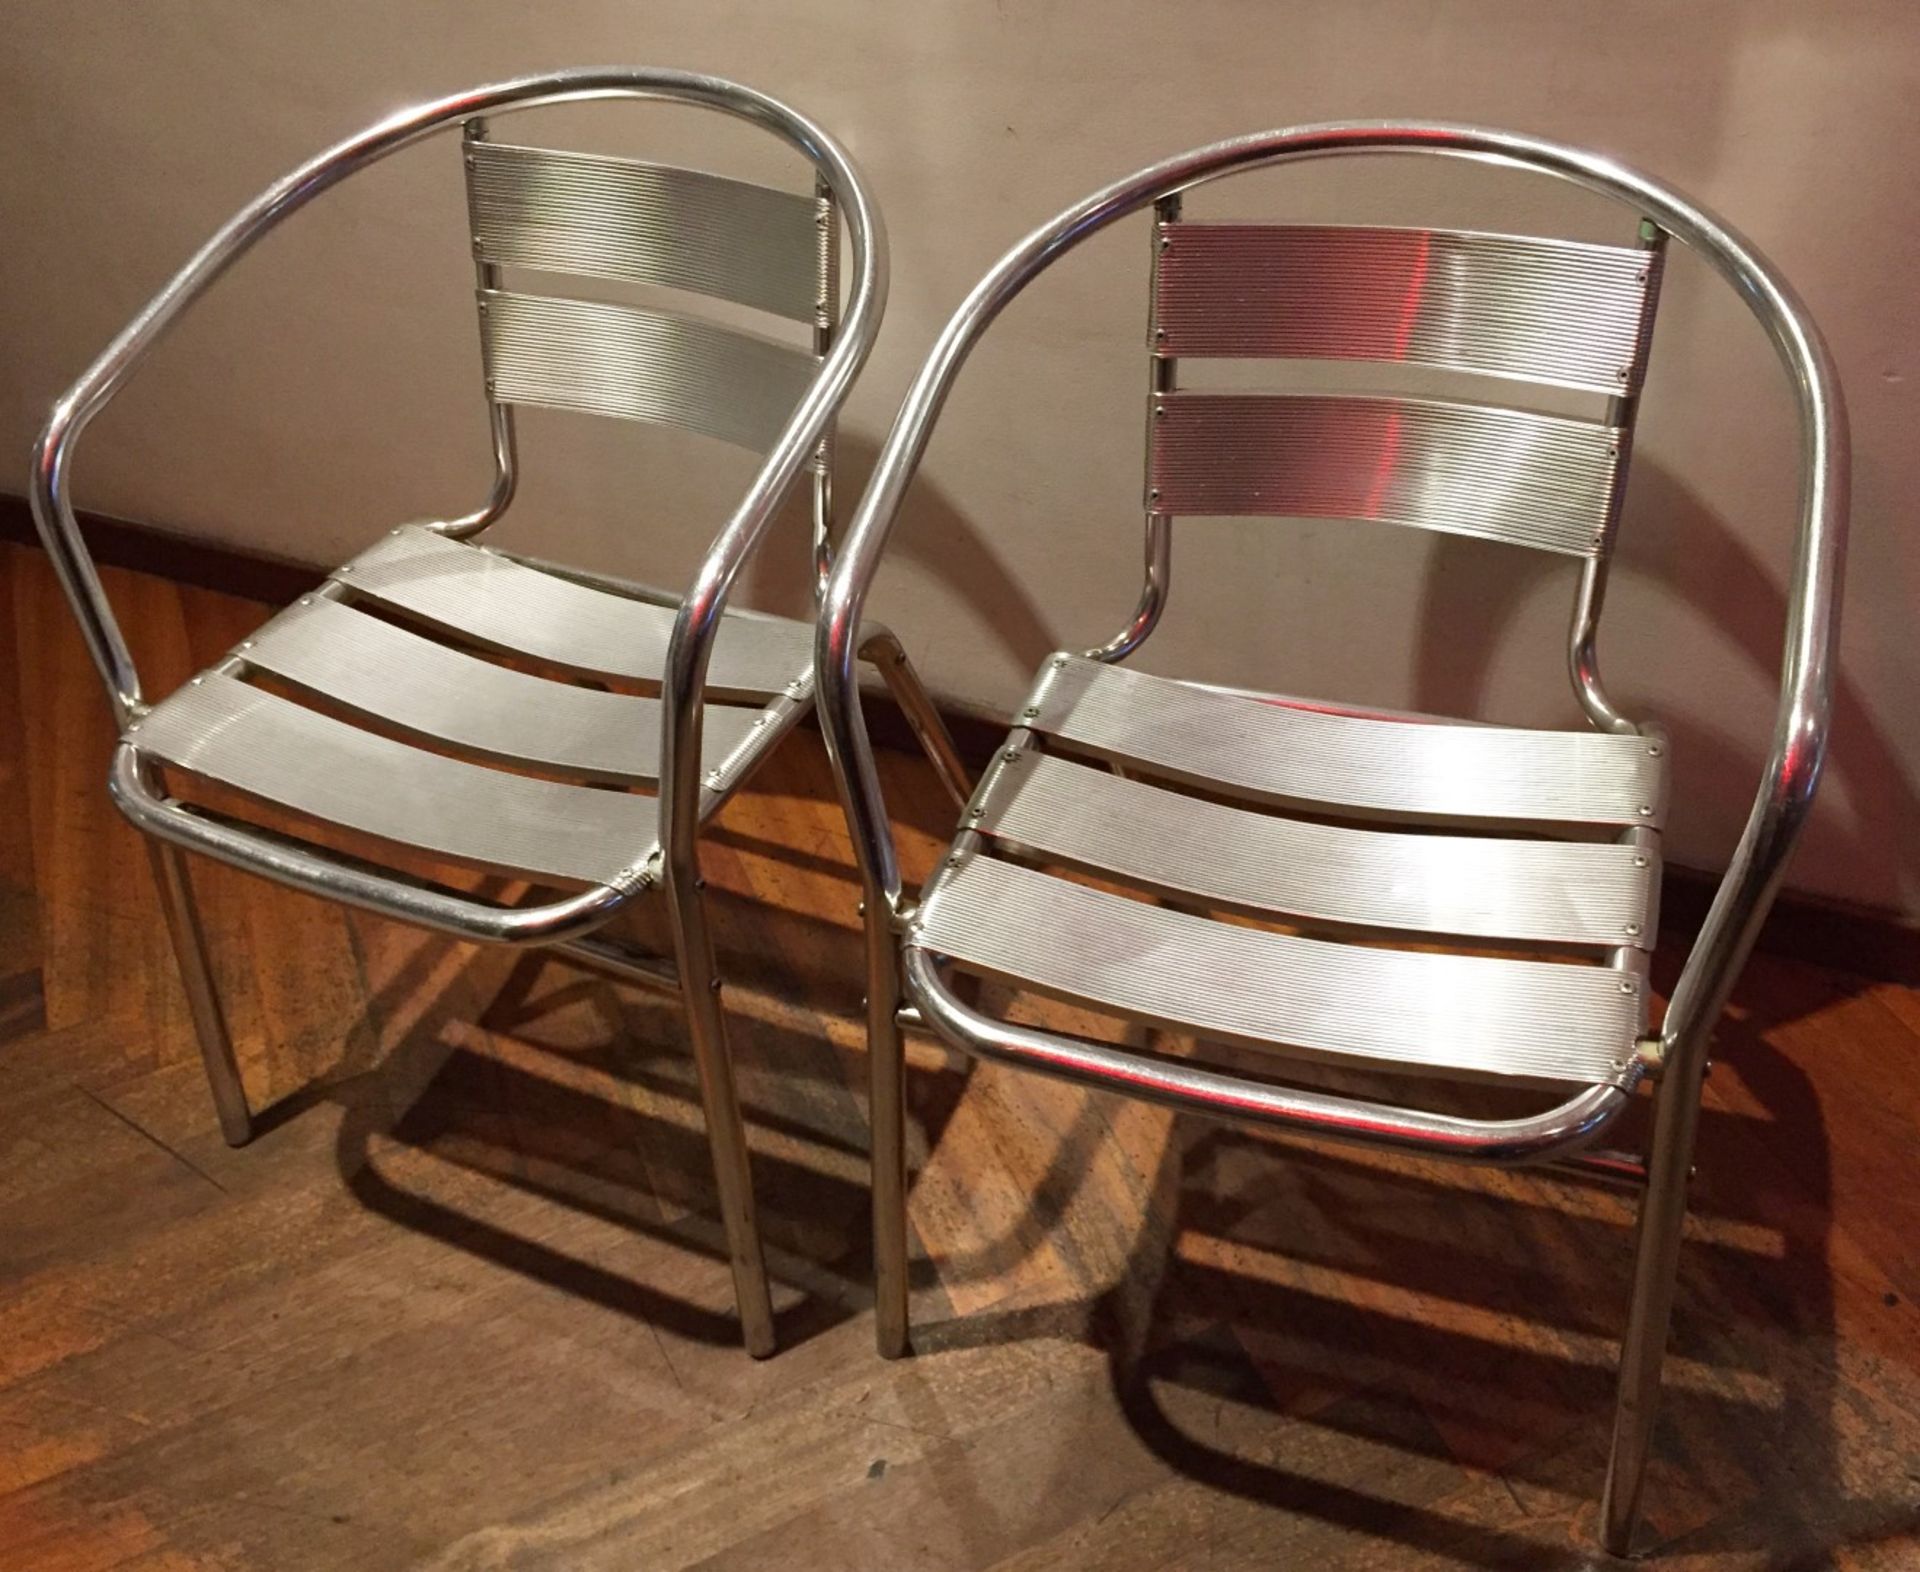 2 x Outdoor Aluminum Garden Chairs - CL188 - Ref GF12 - Location: London W1J